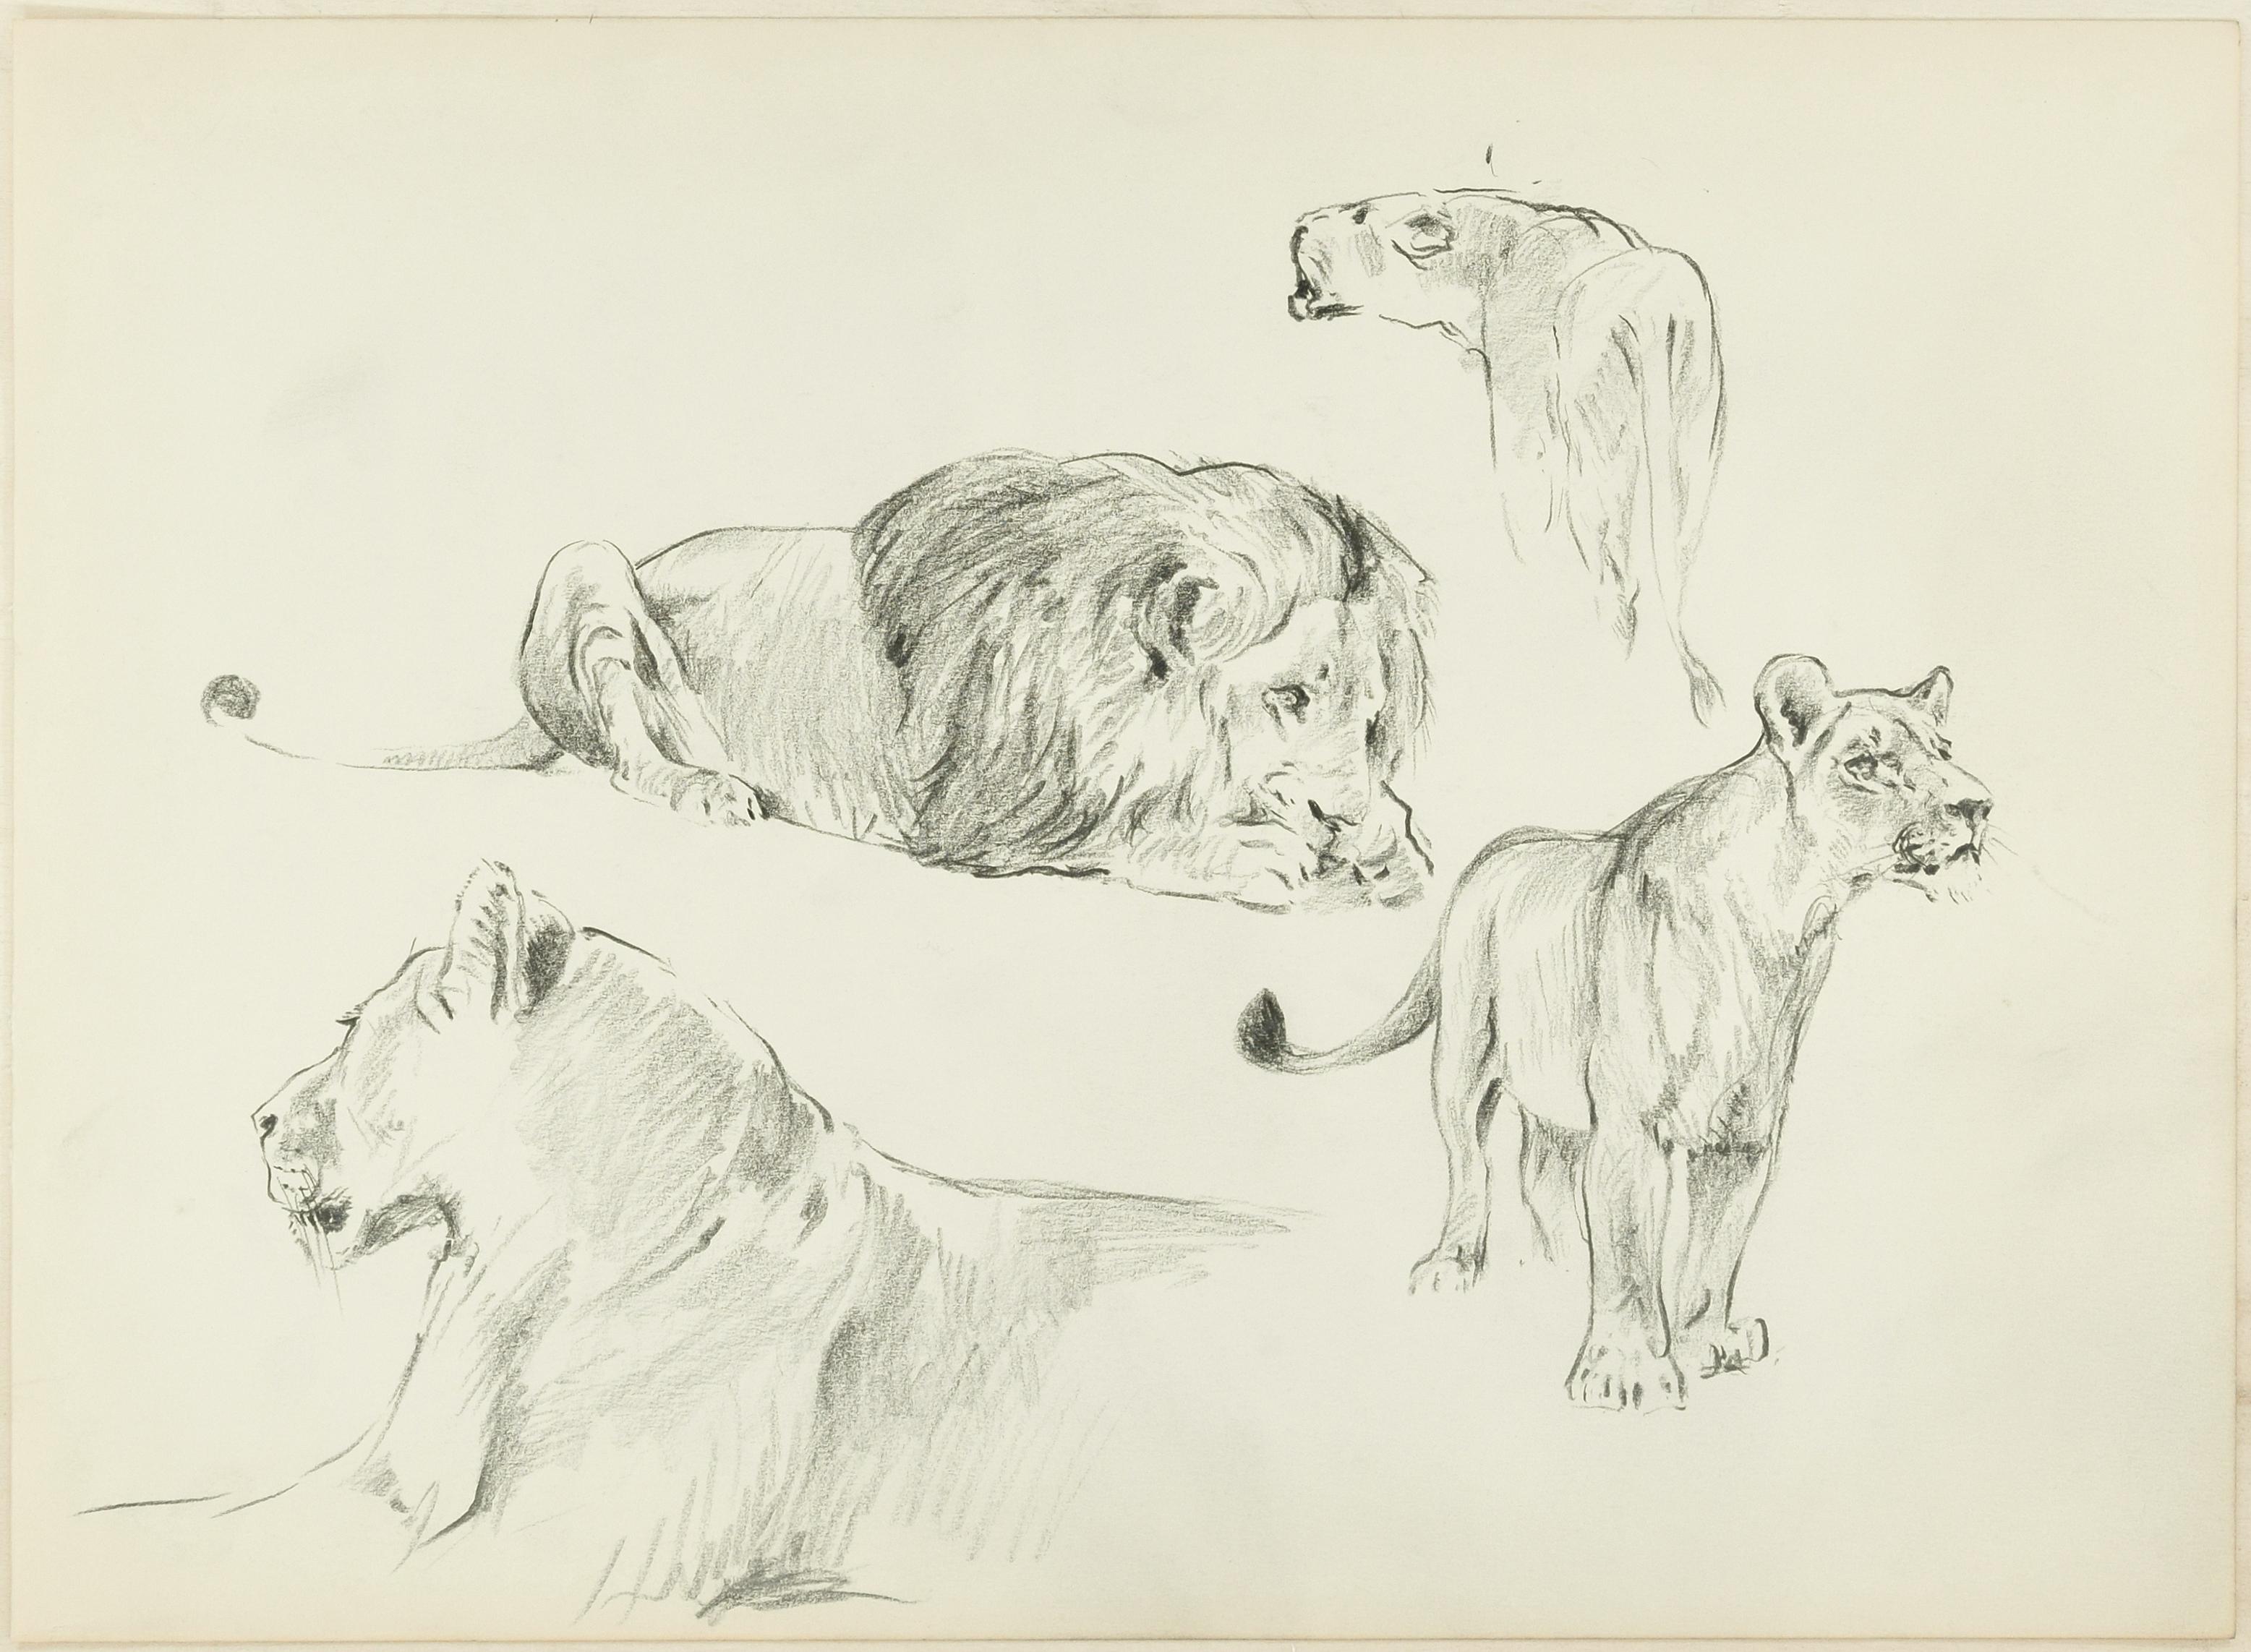 Animal Art Wilhelm Lorenz - Étude de félins - Dessin original au crayon de Willy Lorenz - années 1950